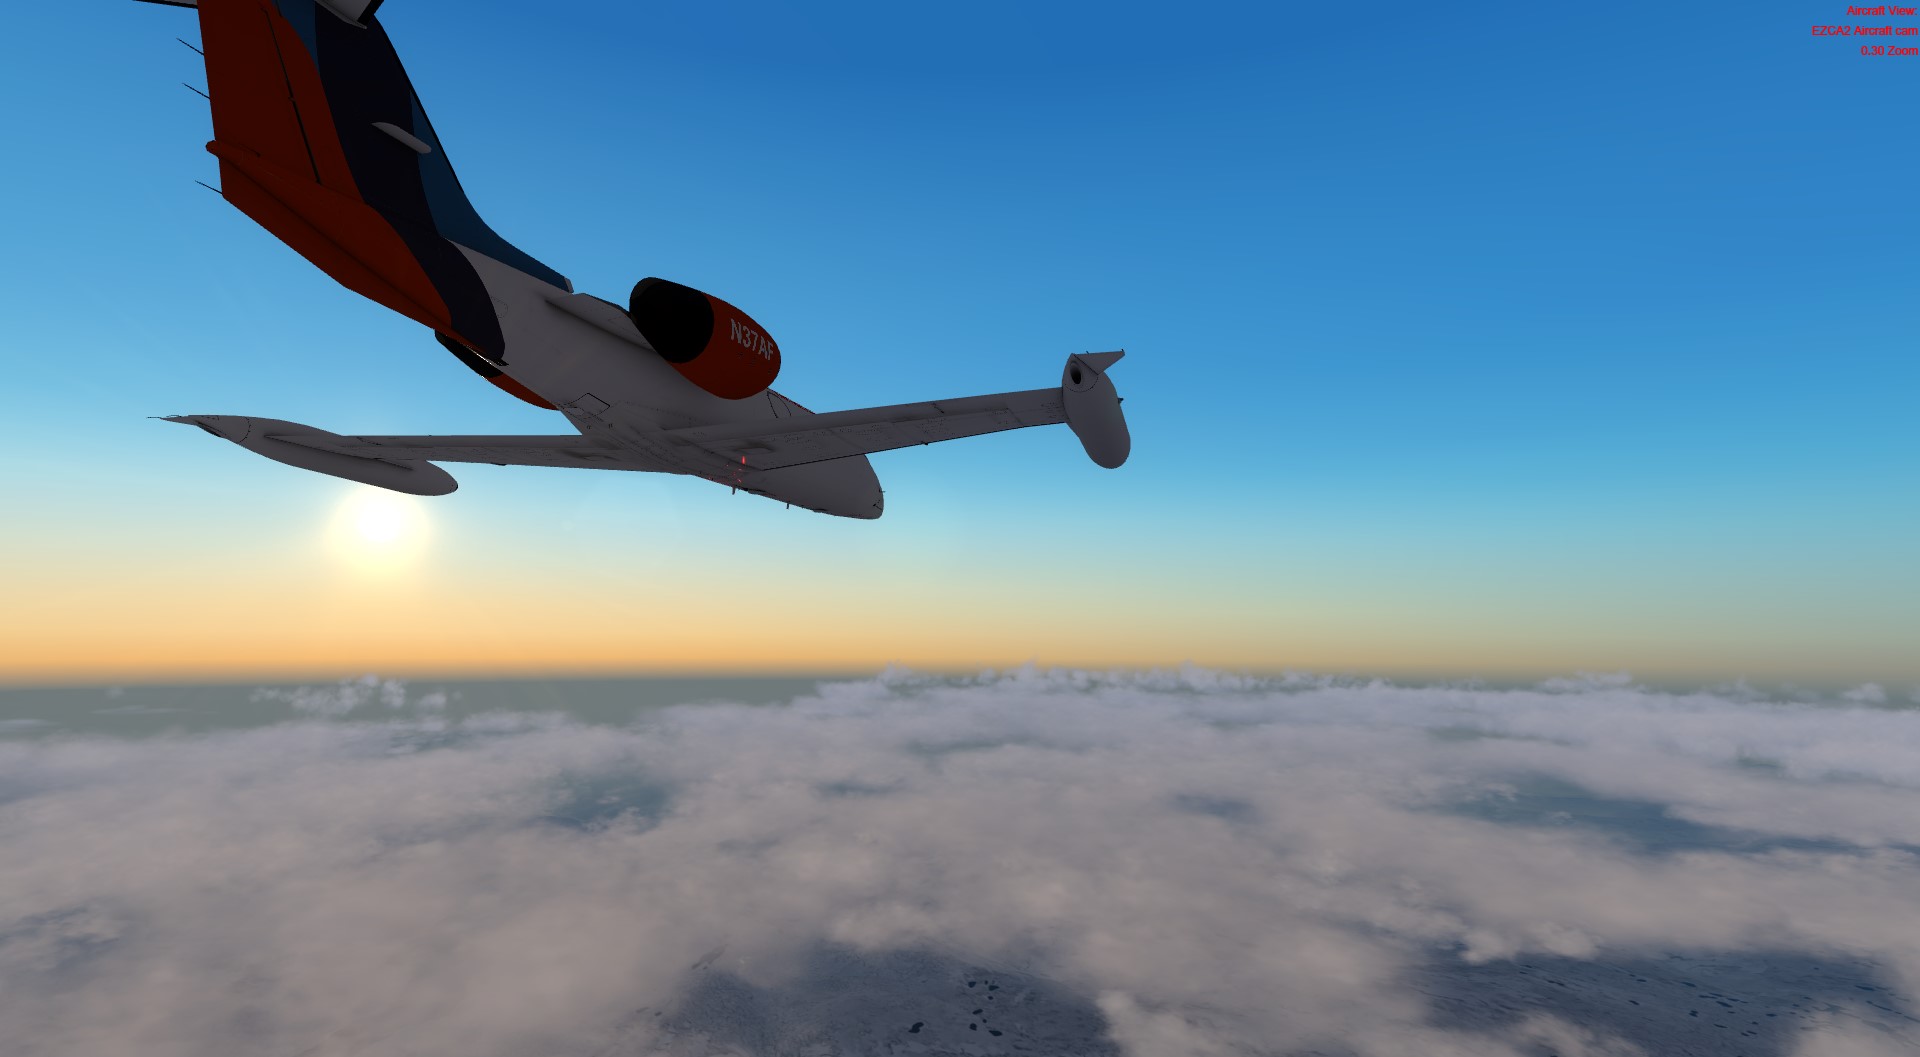 Flysimware – Learjet 35A 评测与冰岛送货之旅-3429 